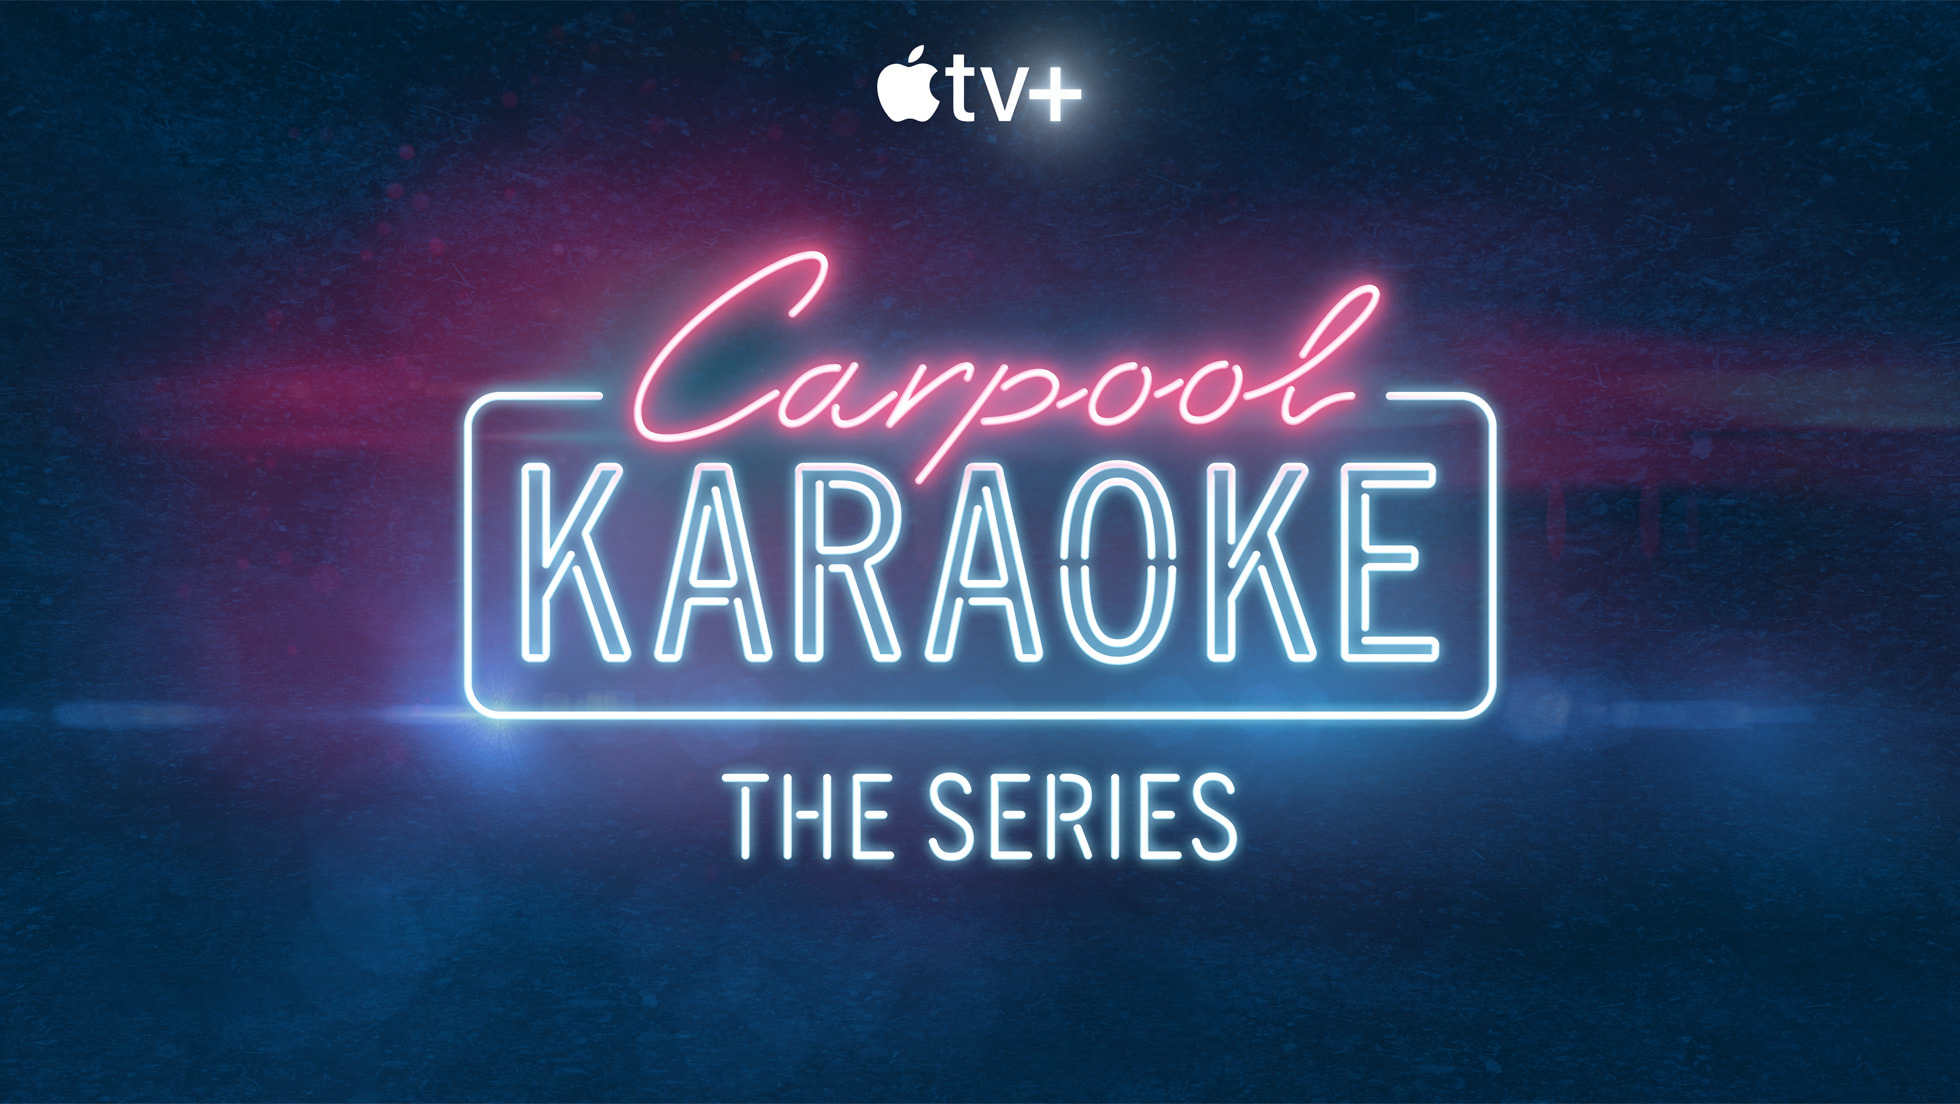 Karaoke time. Apple караоке. Времена года караоке.